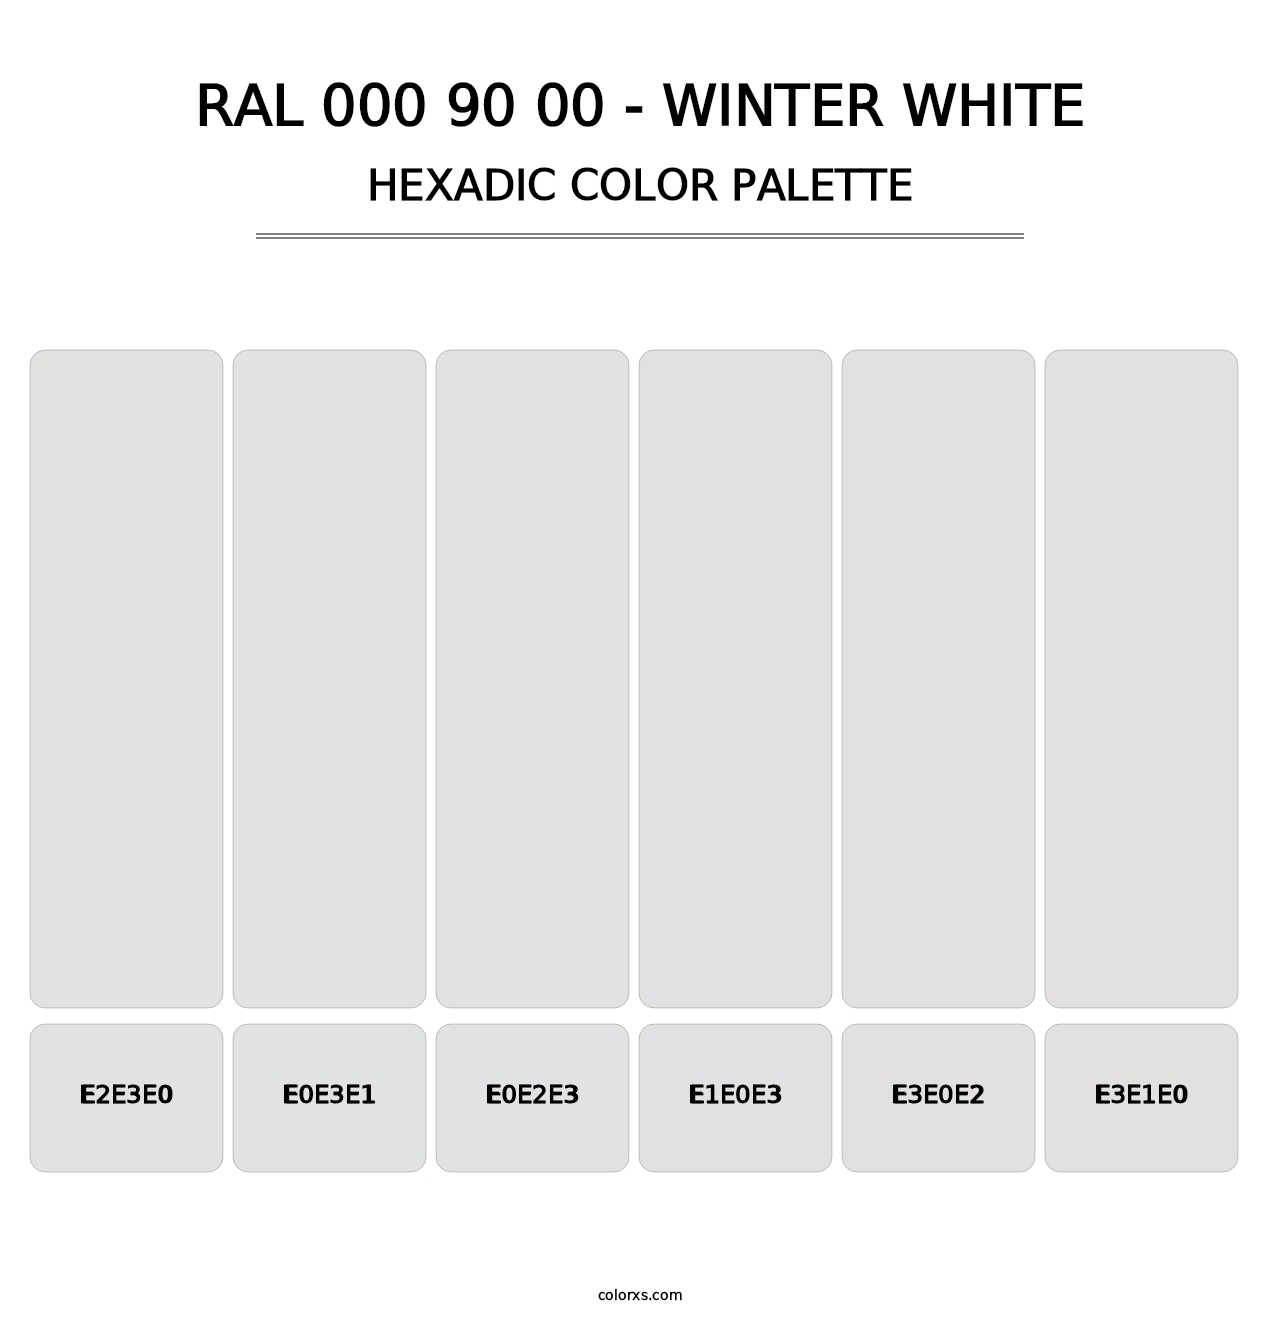 RAL 000 90 00 - Winter White - Hexadic Color Palette